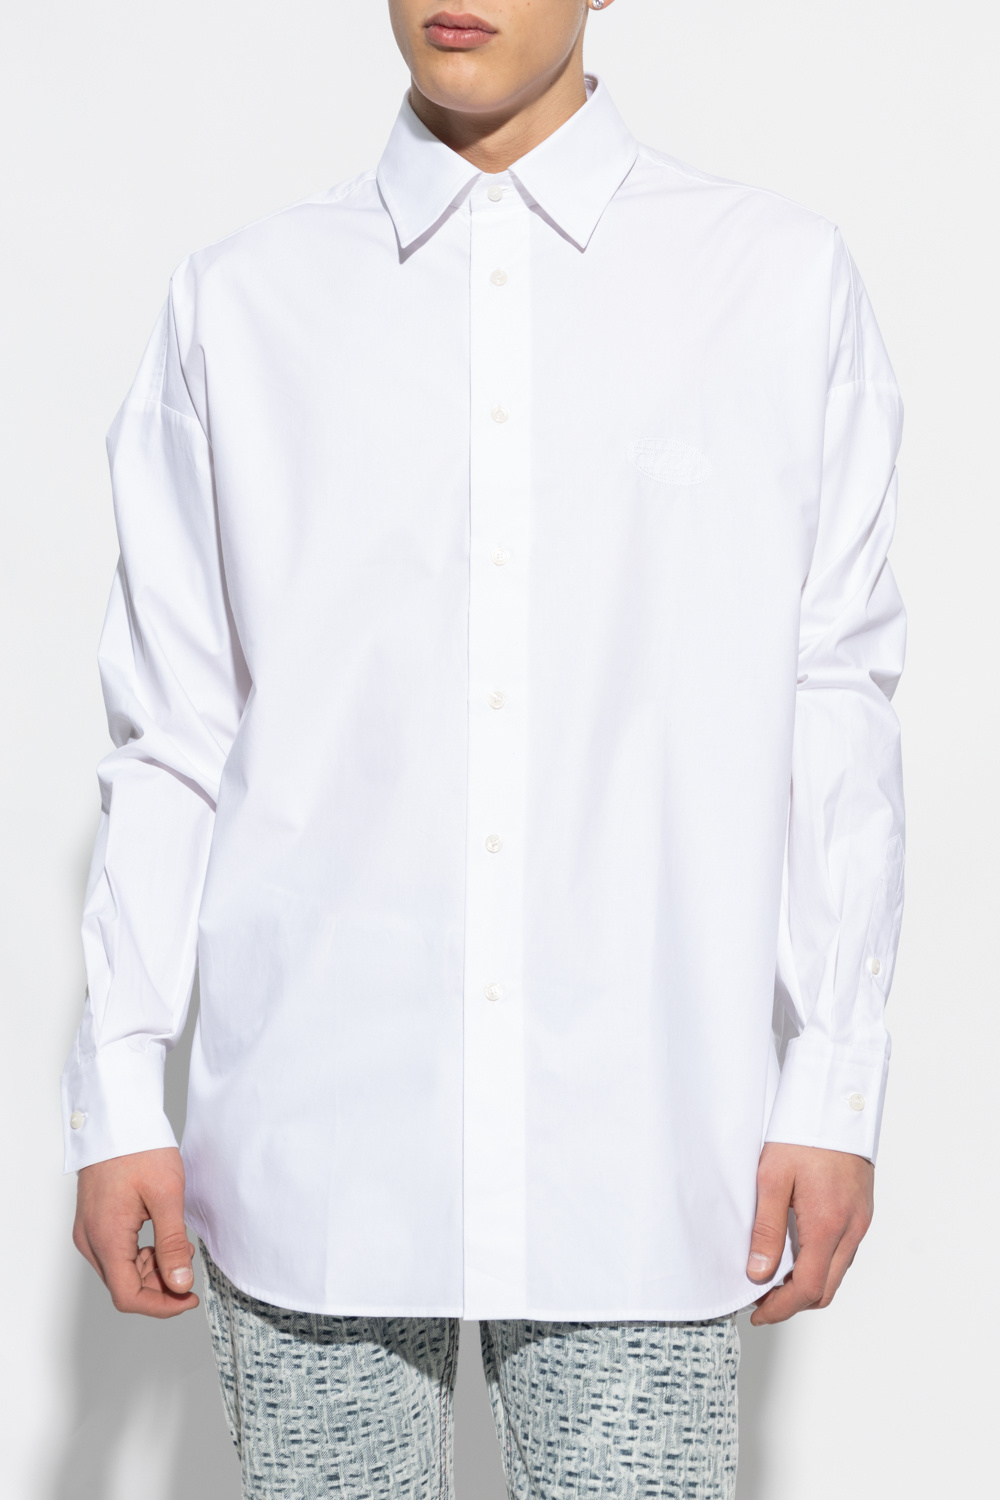 DOUBLY - PLAIN' shirt Diesel - GenesinlifeShops TC - White 'S